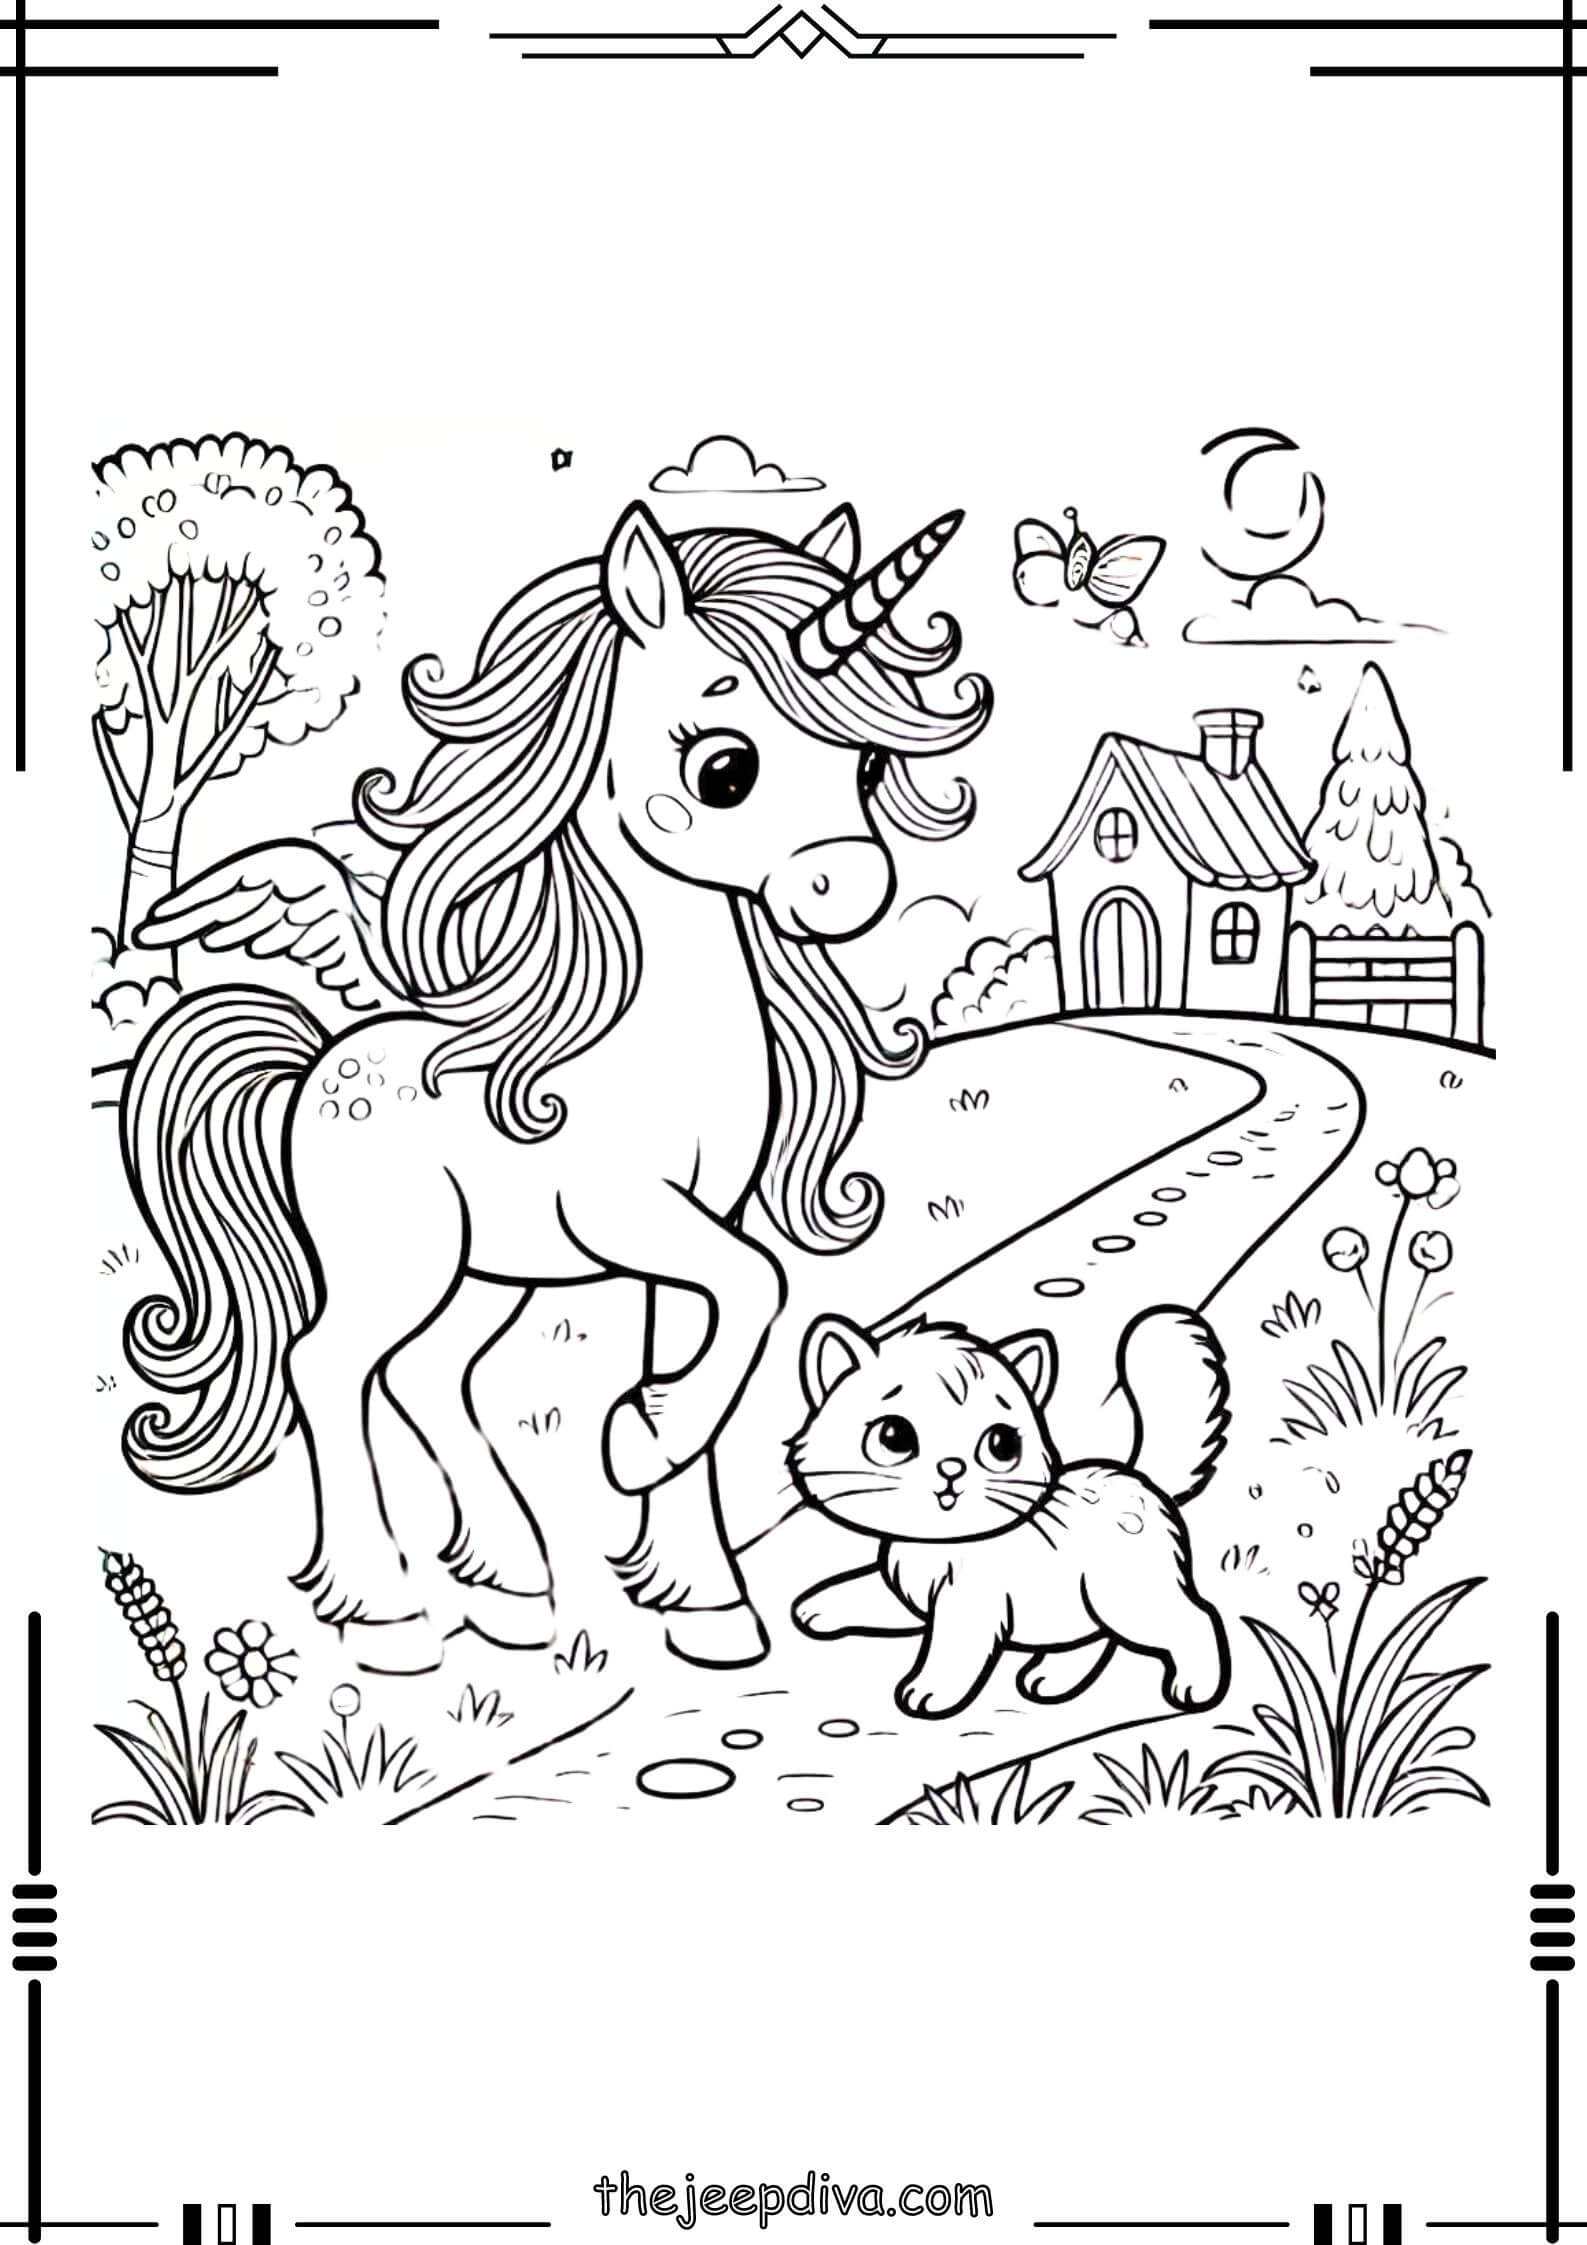 unicorn-coloring-page-hard-20